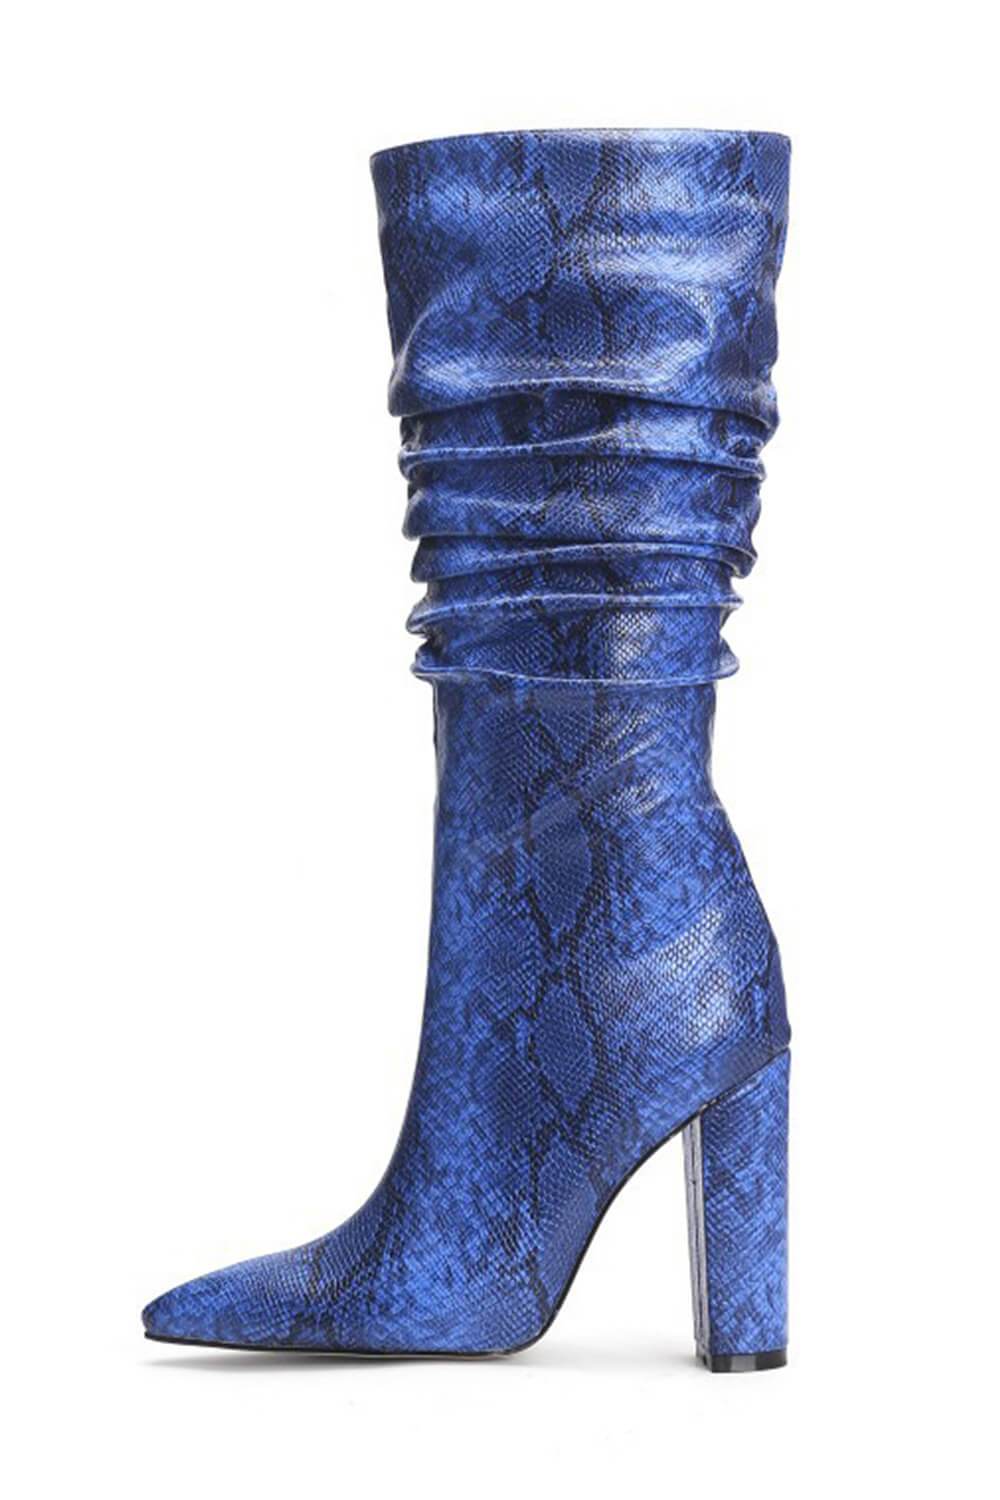 blue snakeskin boots